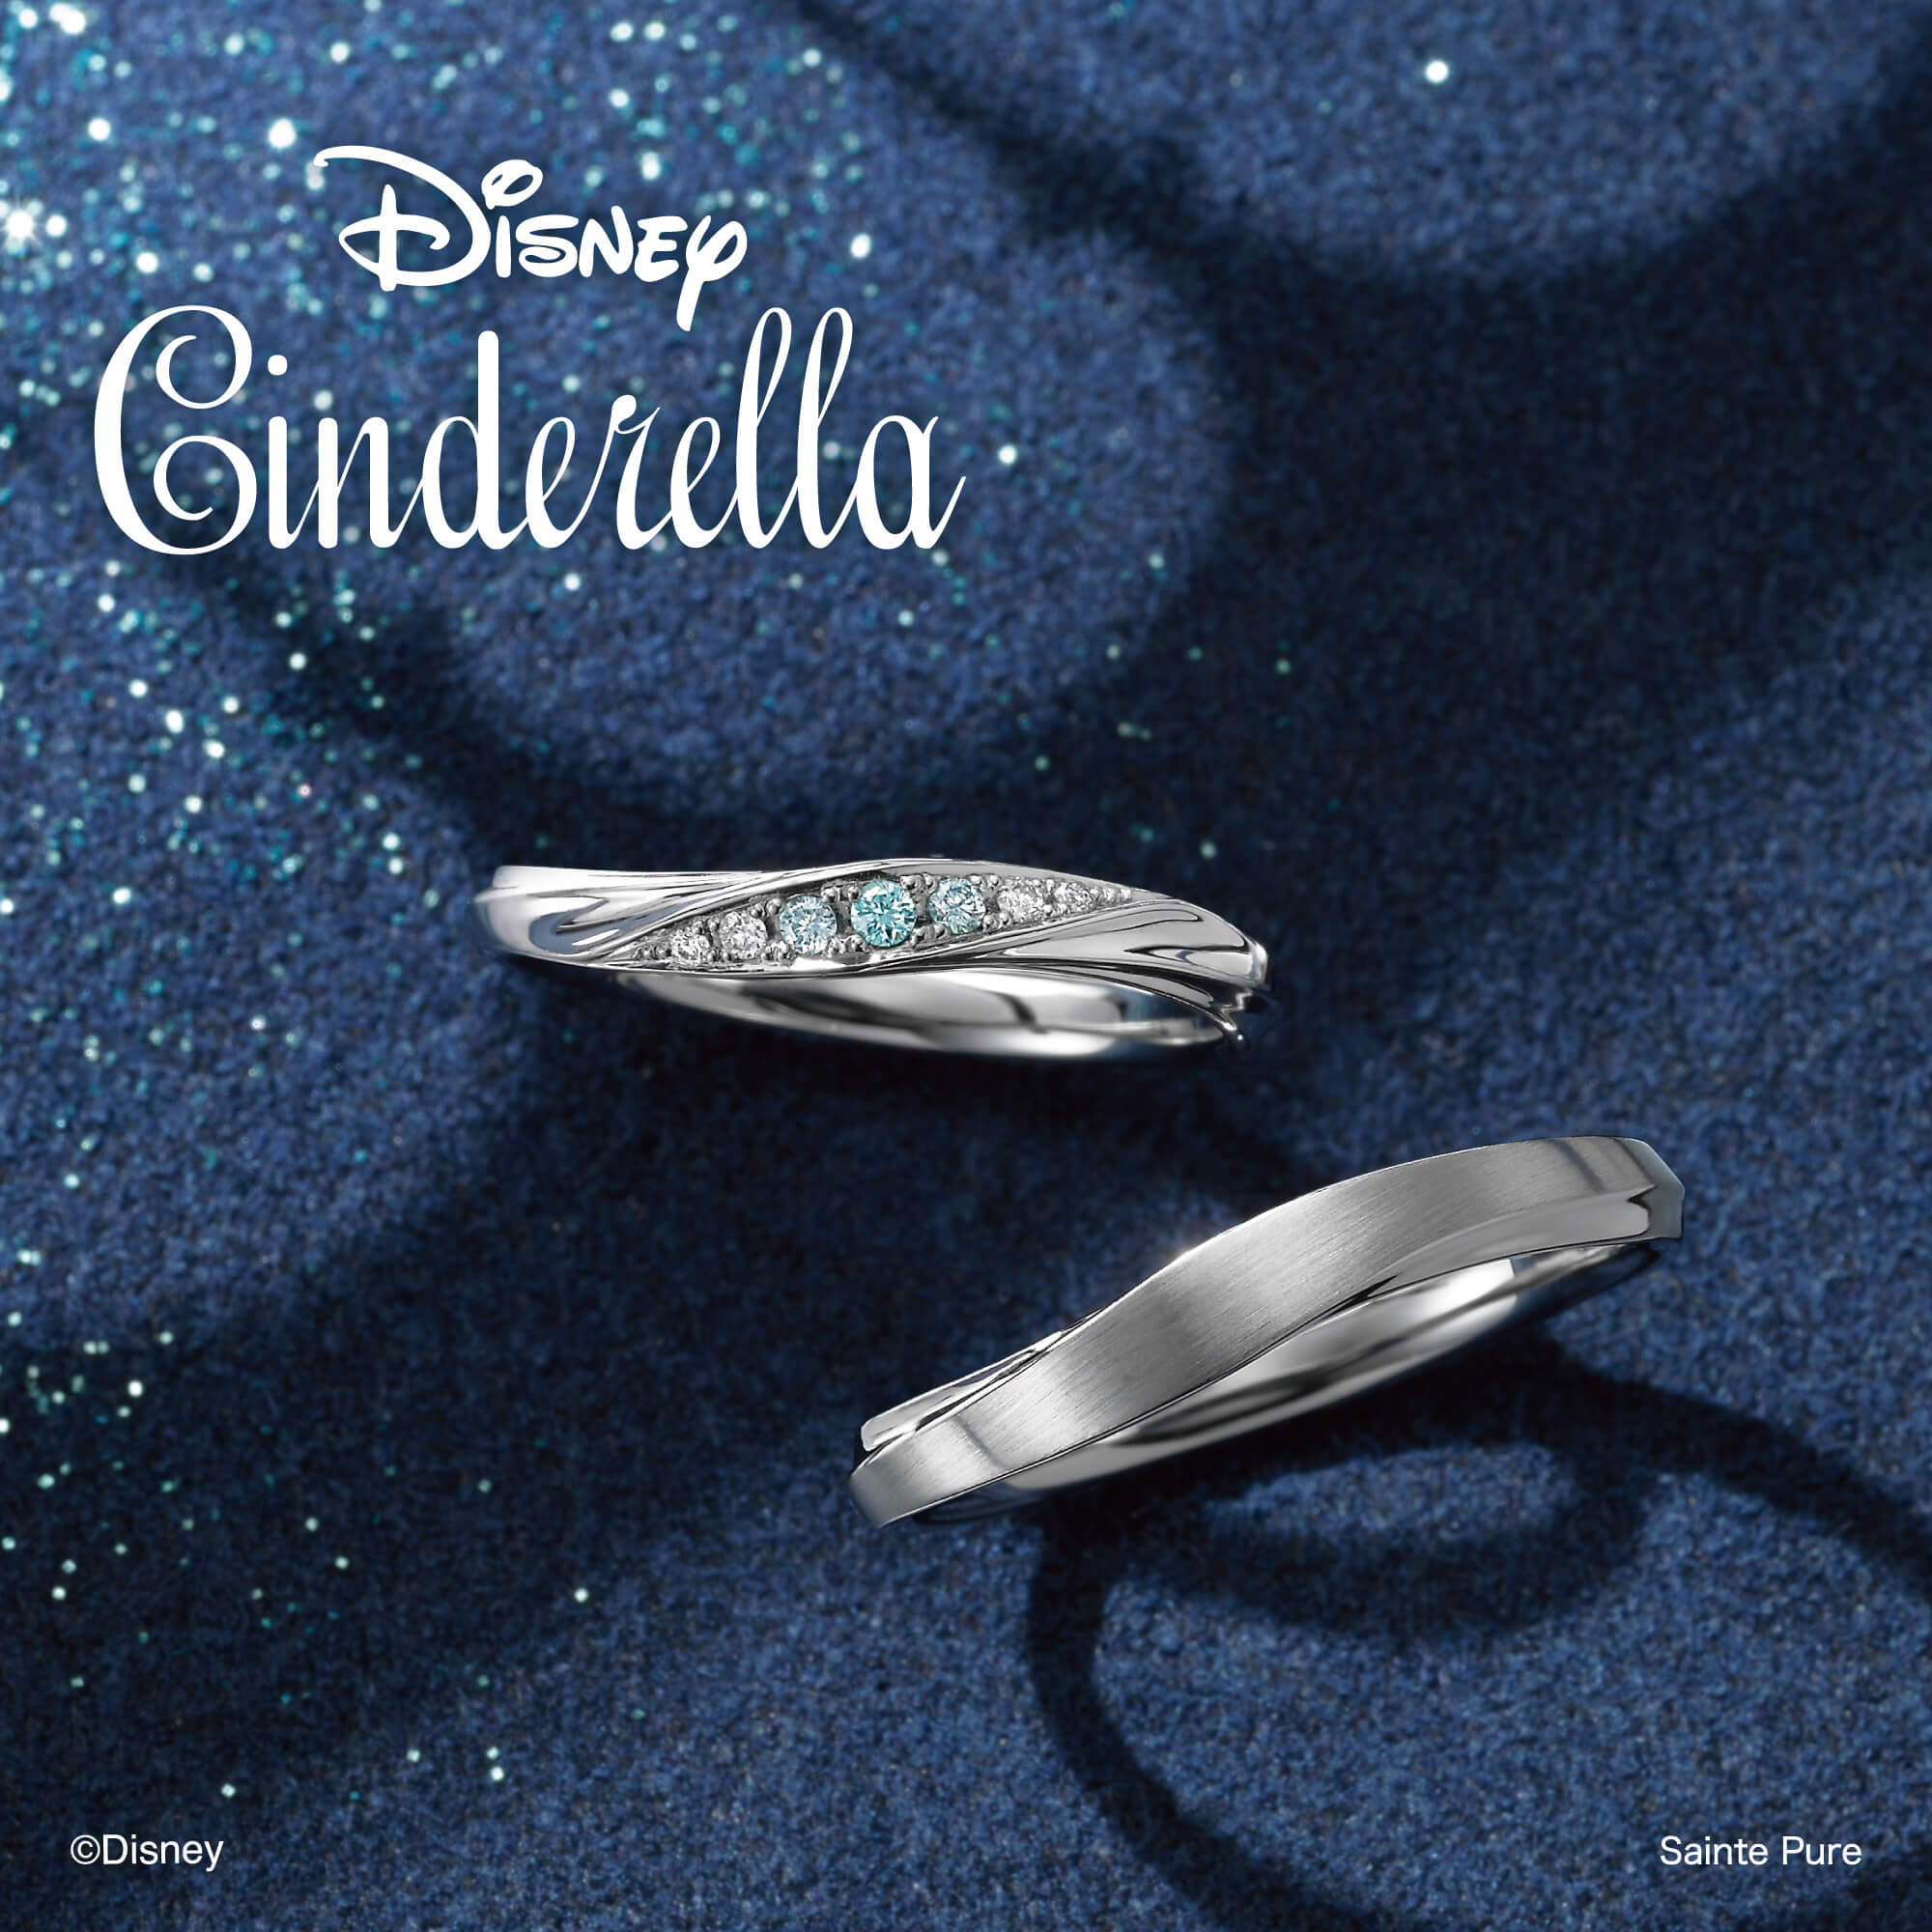 DisneyCinderellaディズニーシンデレラの結婚指輪マリッジリングMarriageringのMidnightMagicミッドナイトマジック